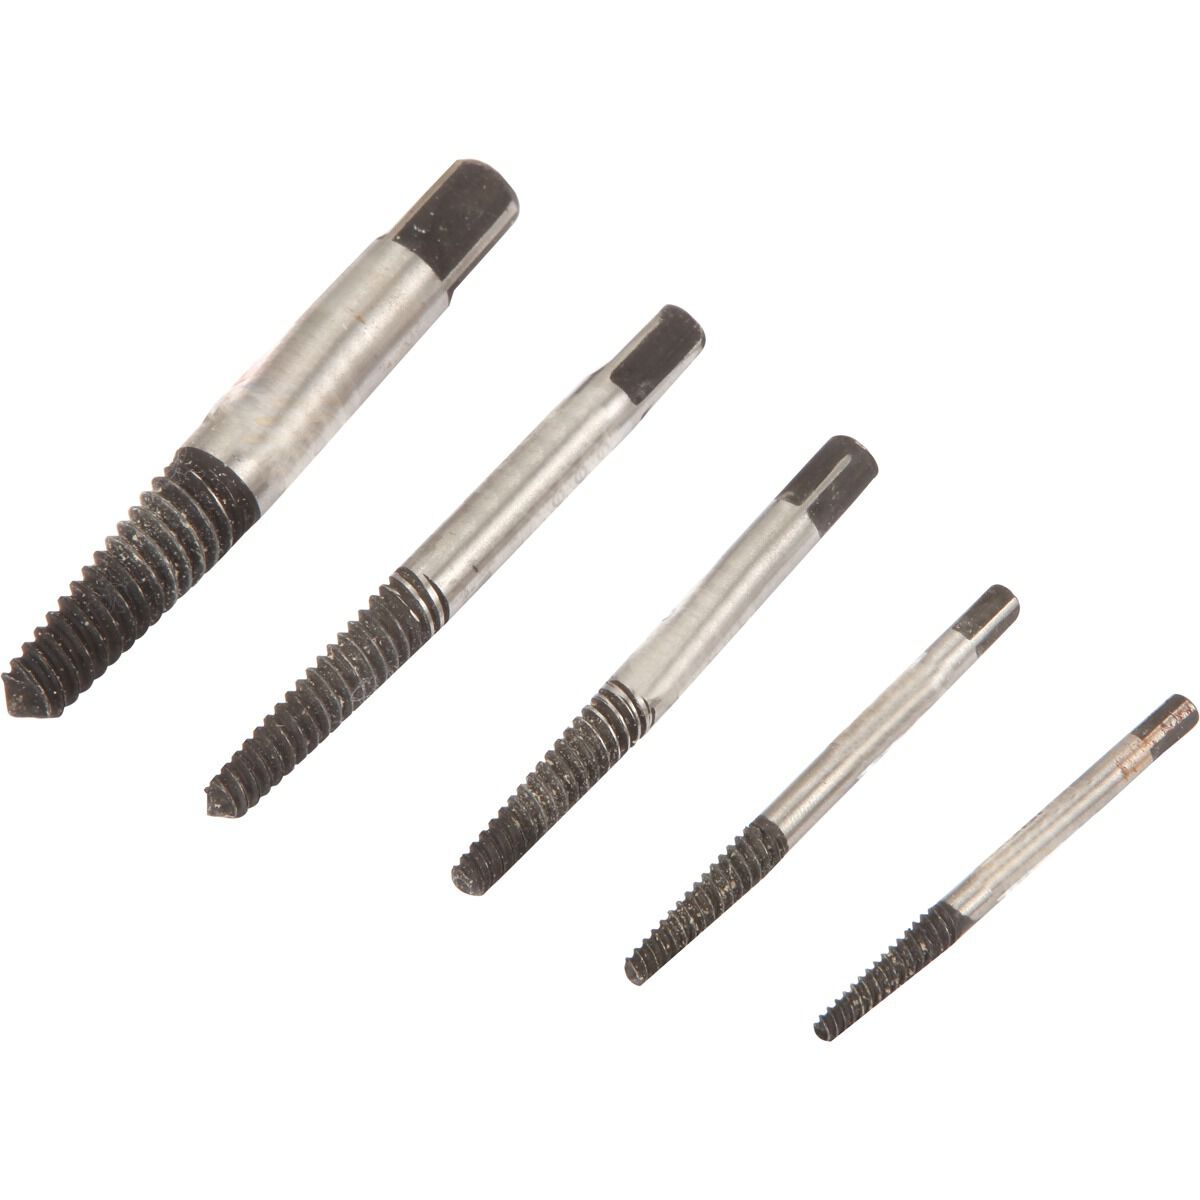 5pc stud screw extractor tools,garage,quality,brand new